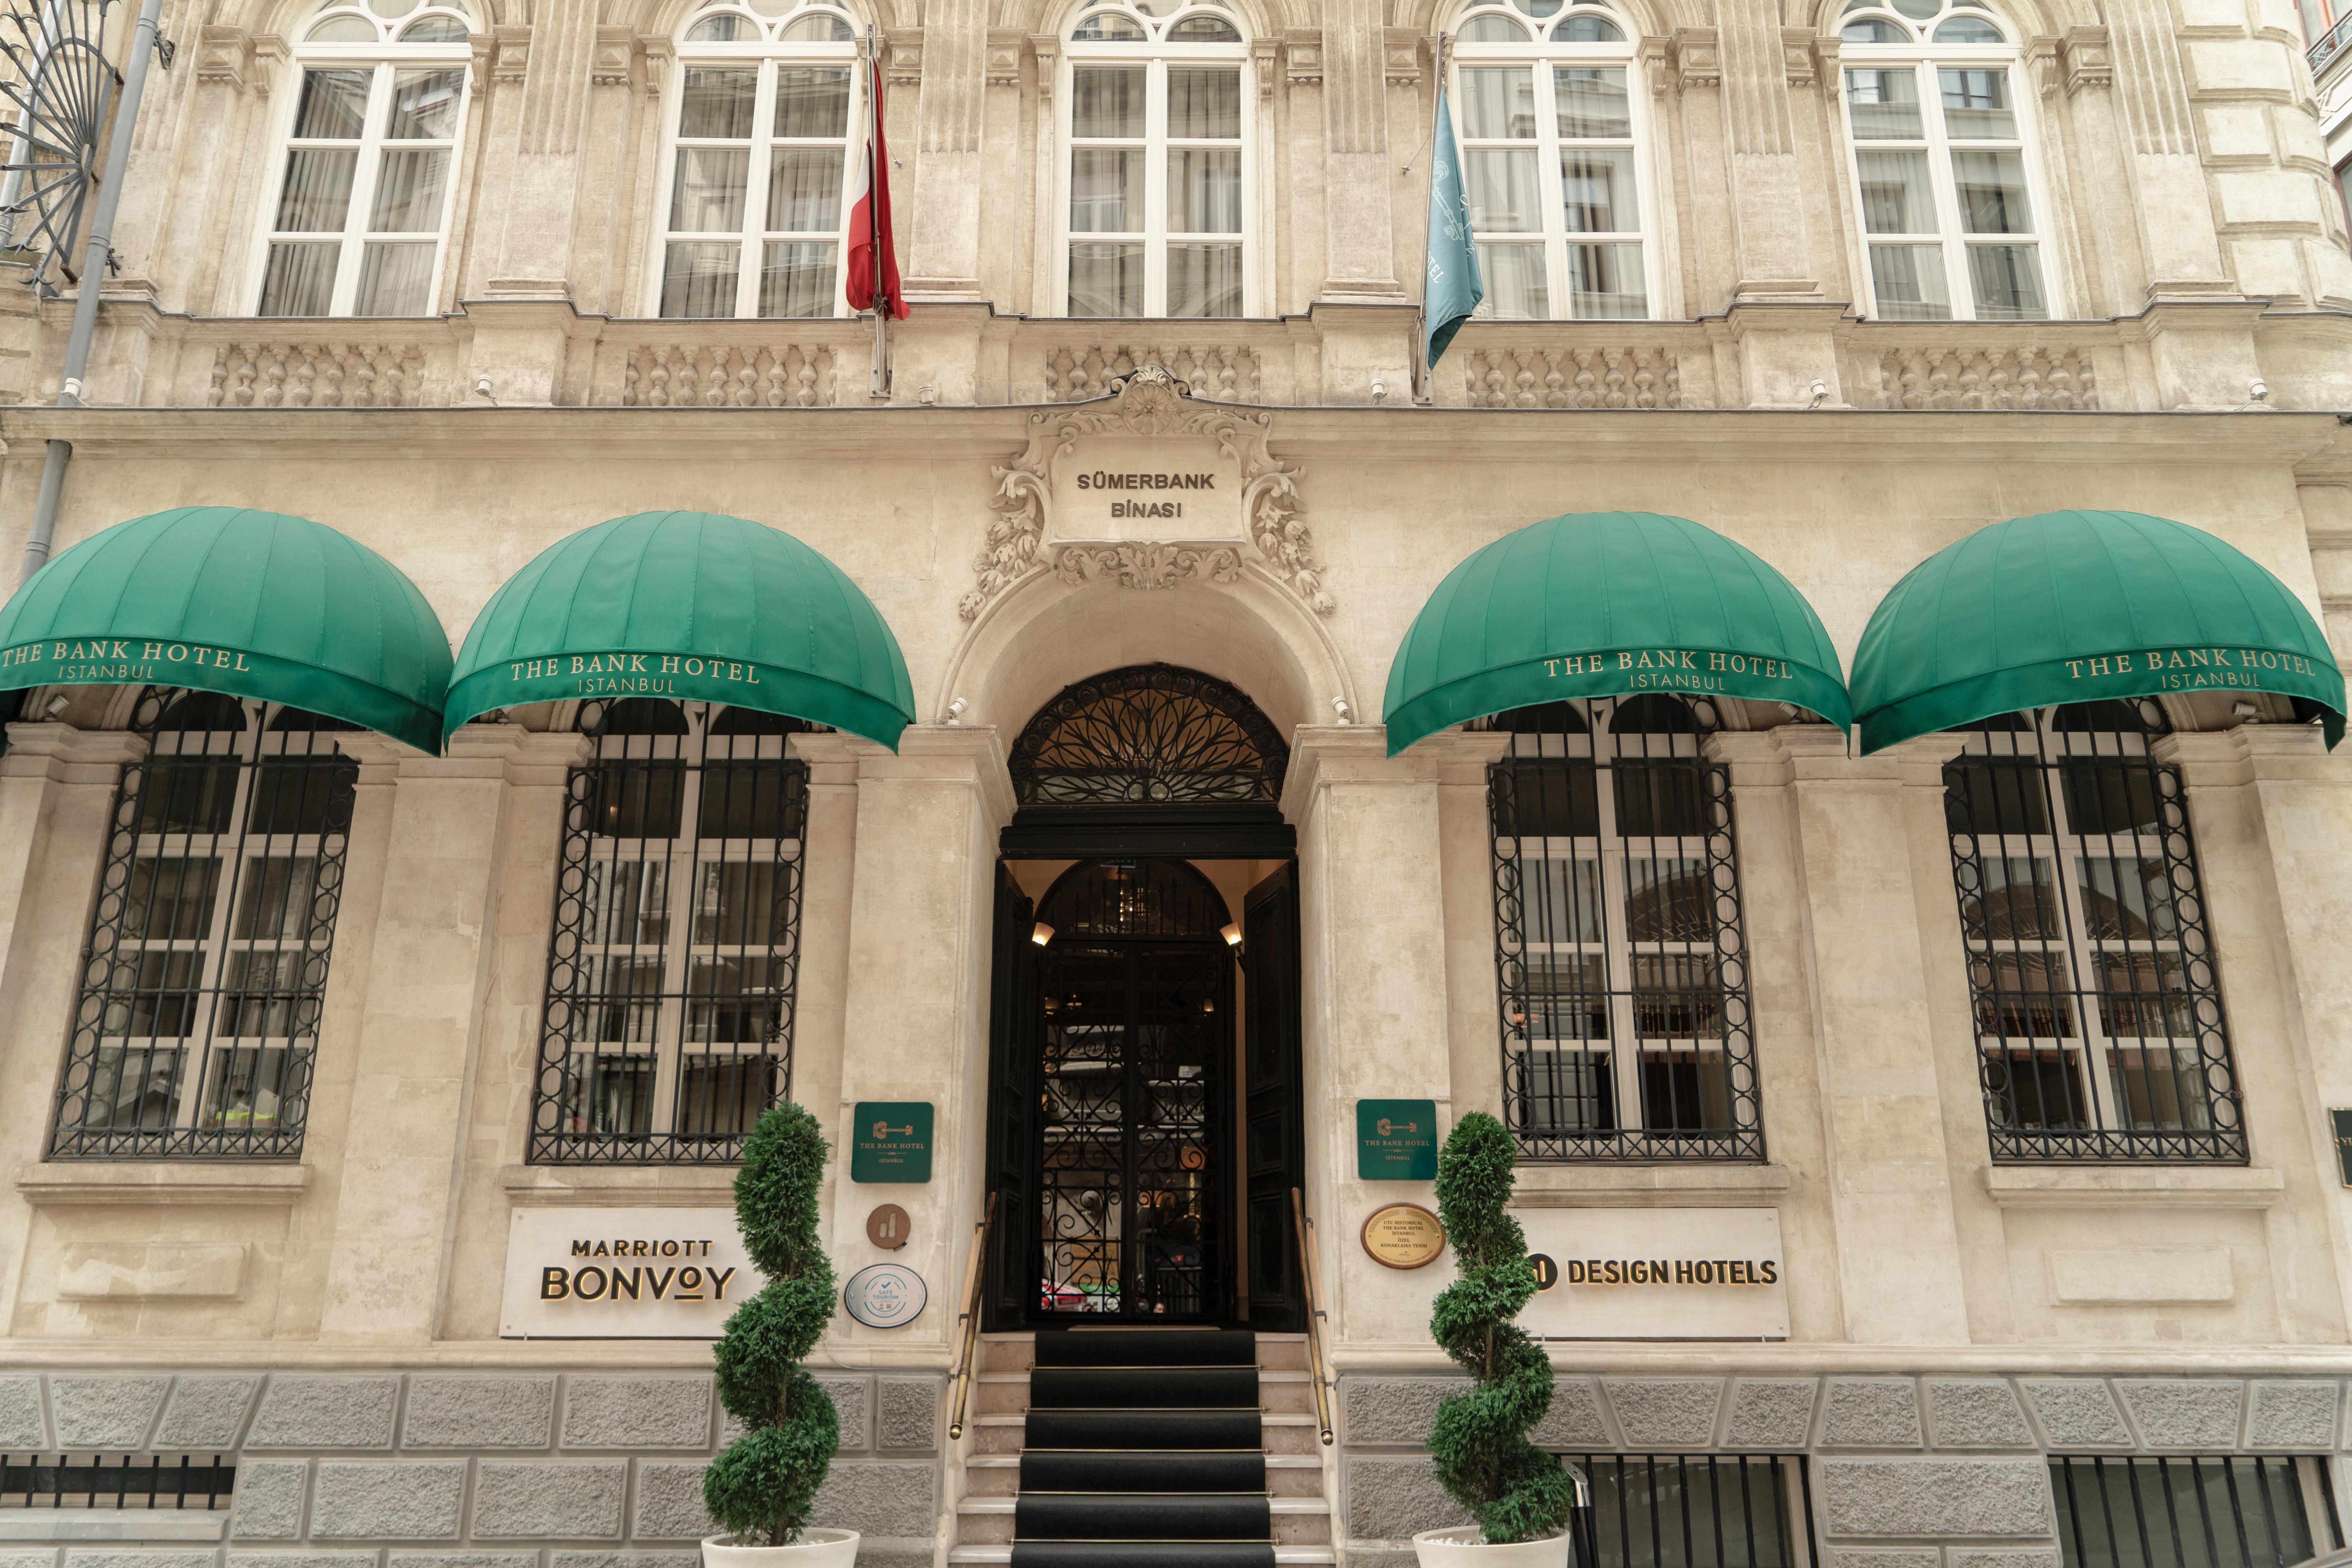 The bank hotel. The Bank Hotel Istanbul. Cronton Design Hotel Стамбул. The House Hotel Karakoy Istanbul. Отели в Стамбуле в ориентальном стиле.